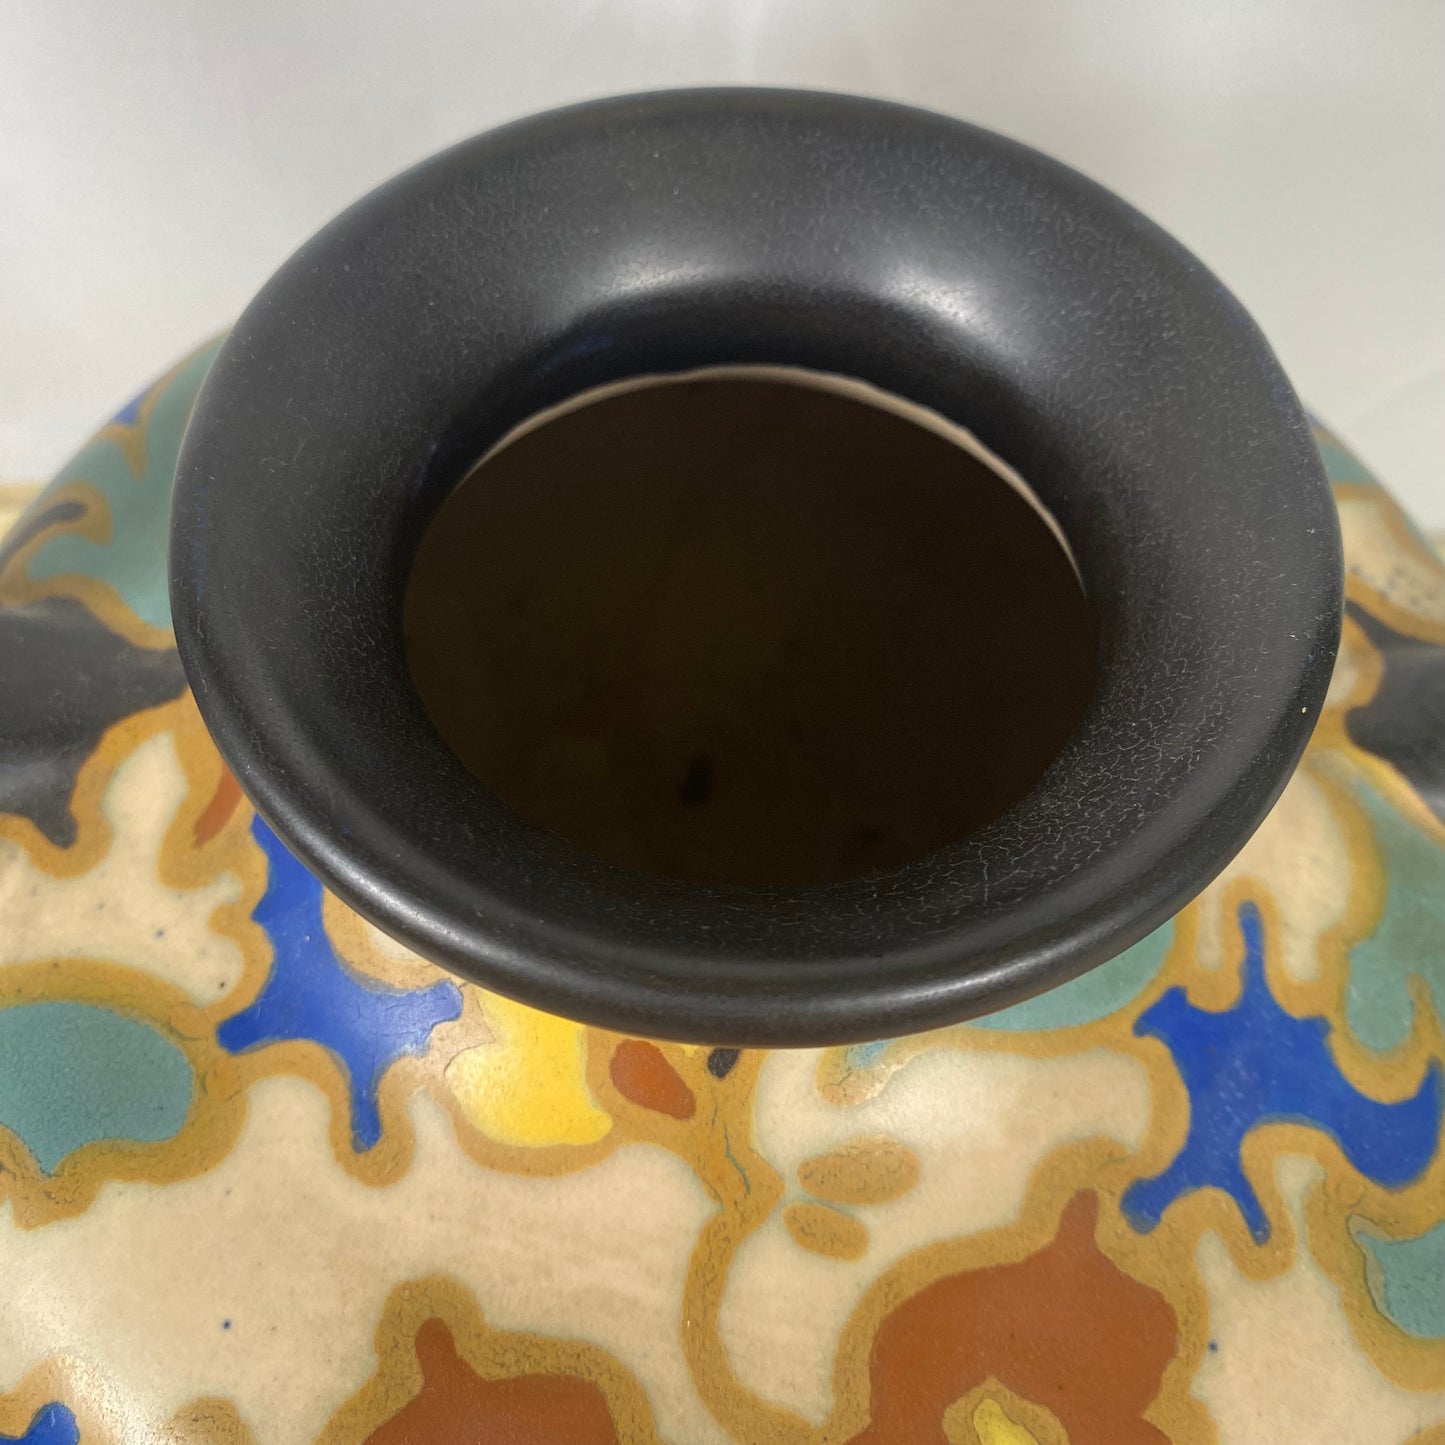 Rare Gouda Dutch Art Deco Pottery Arch-Handled Amphora Vase, Imbra Pattern c.1920s